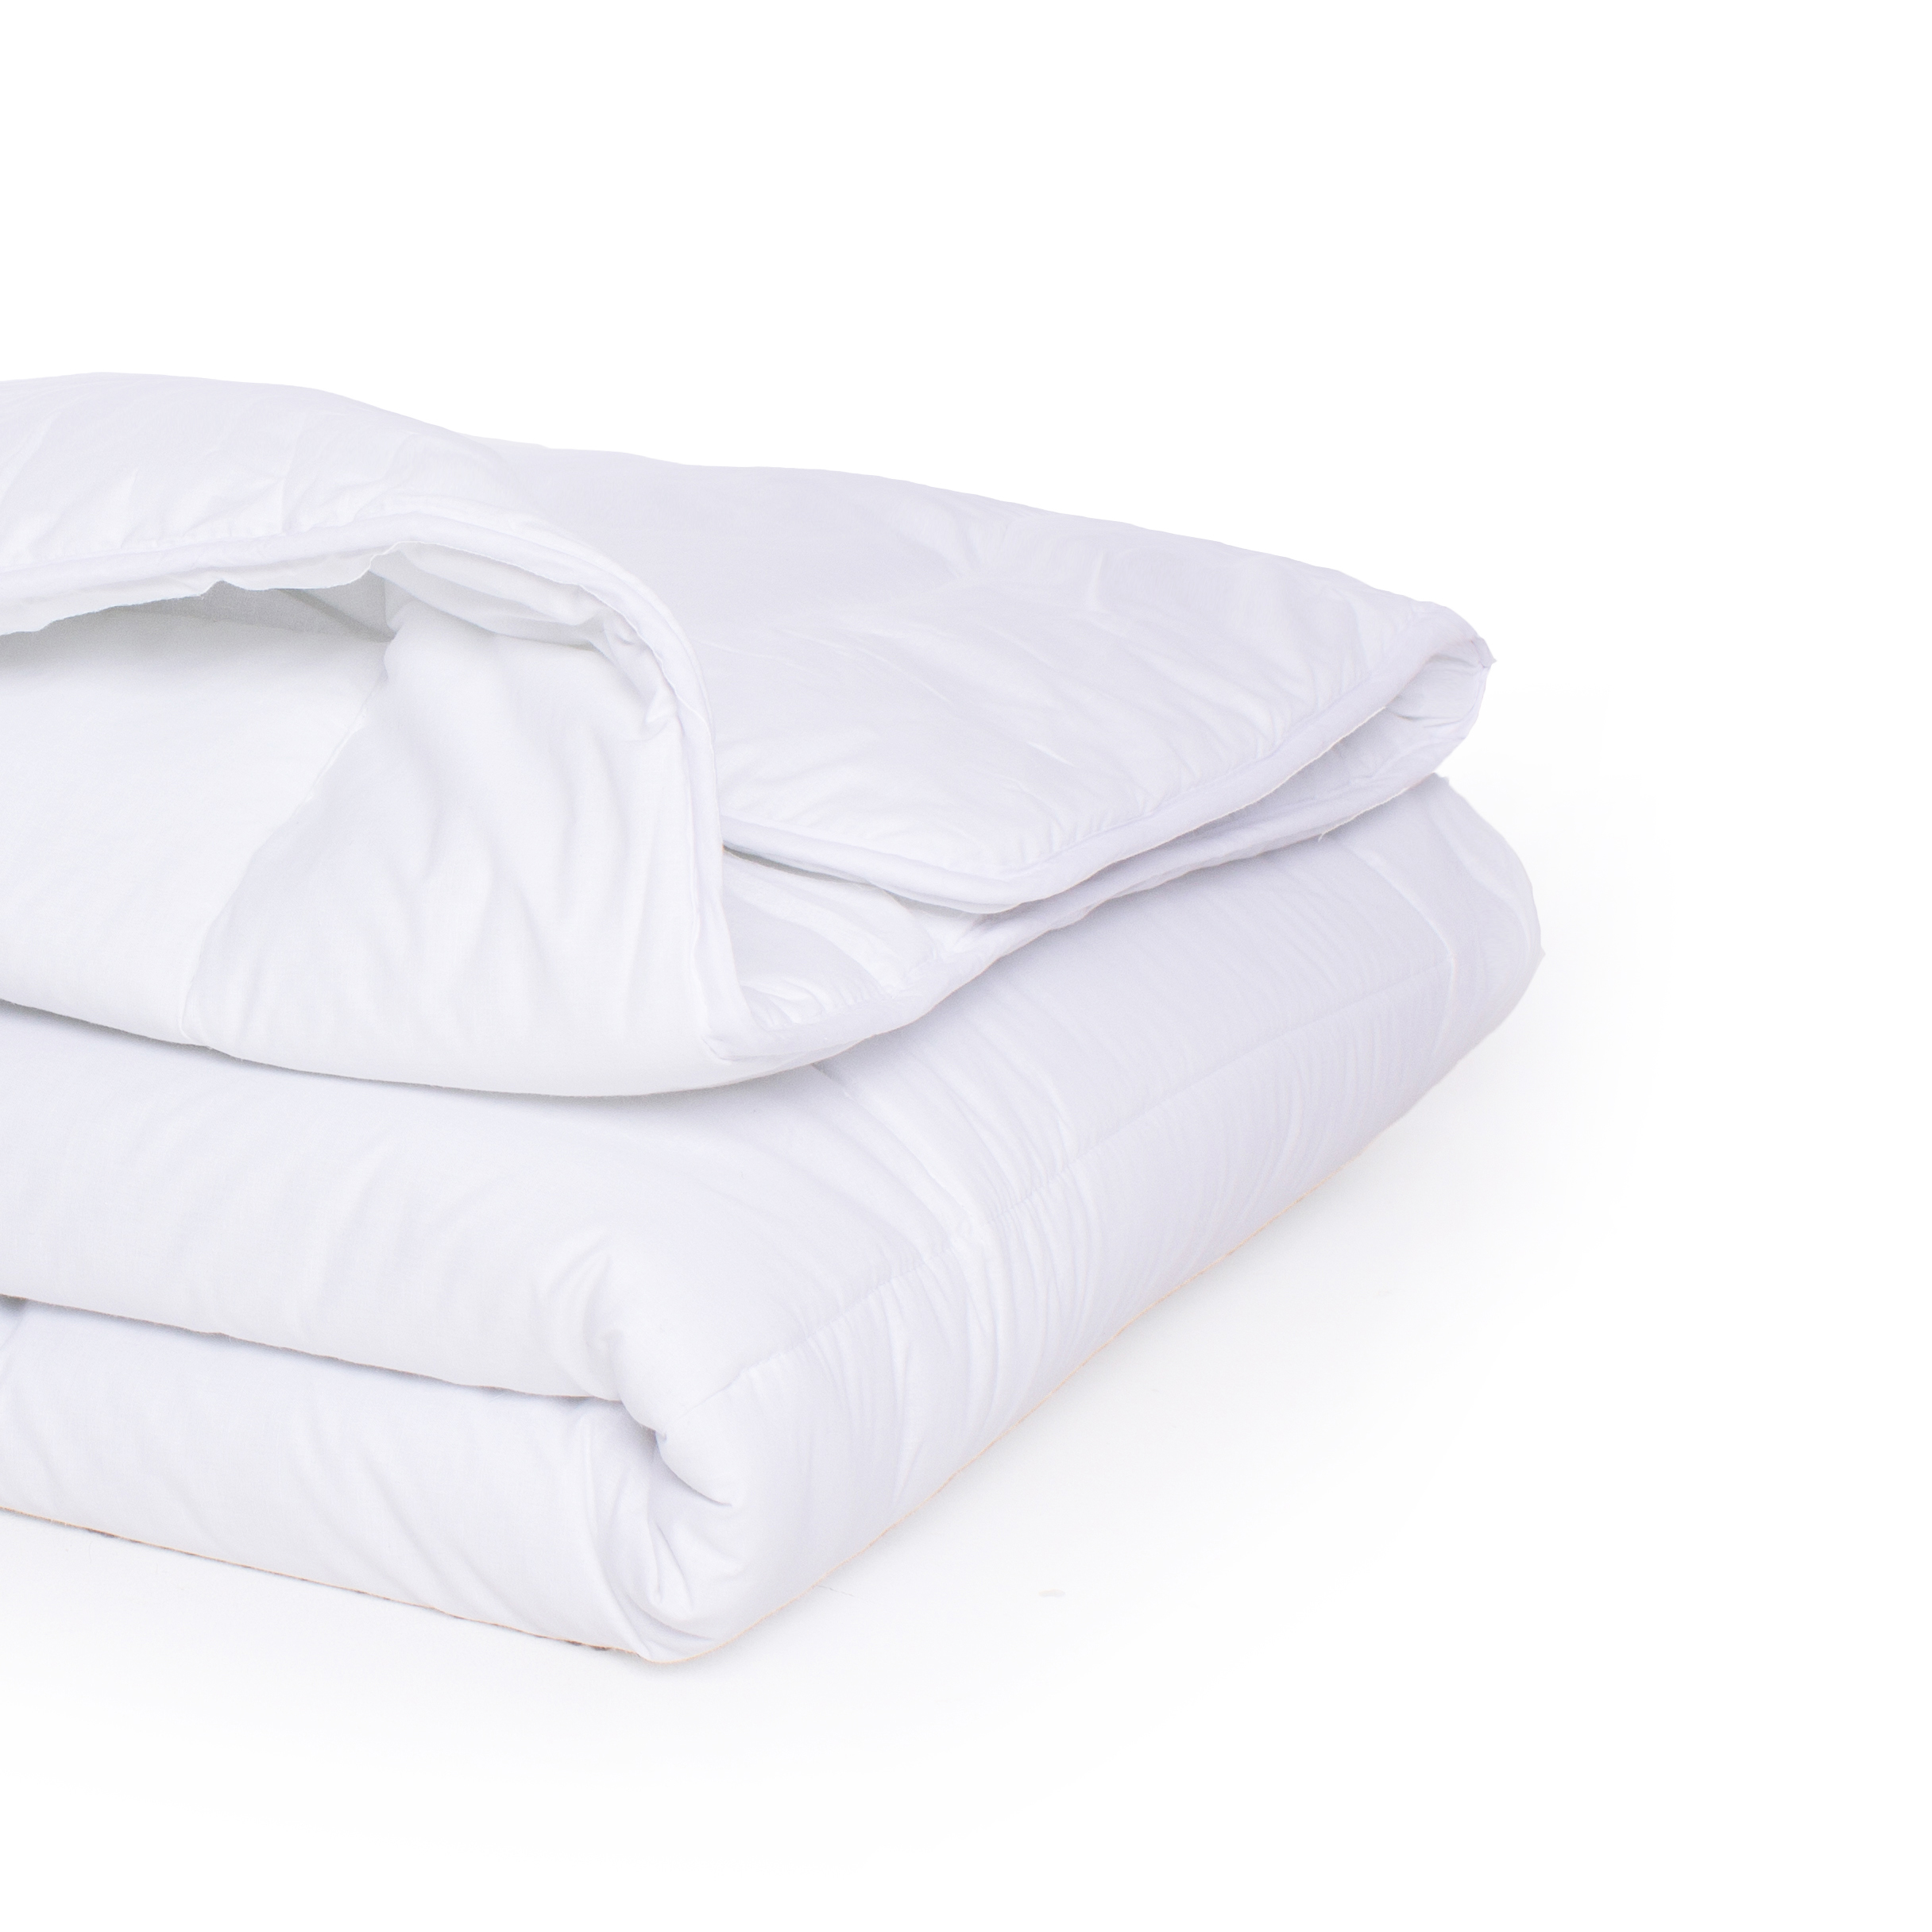 Одеяло шерстяное MirSon Bianco Экстра Премиум №0786, демисезонное, 220x240 см, белое - фото 4